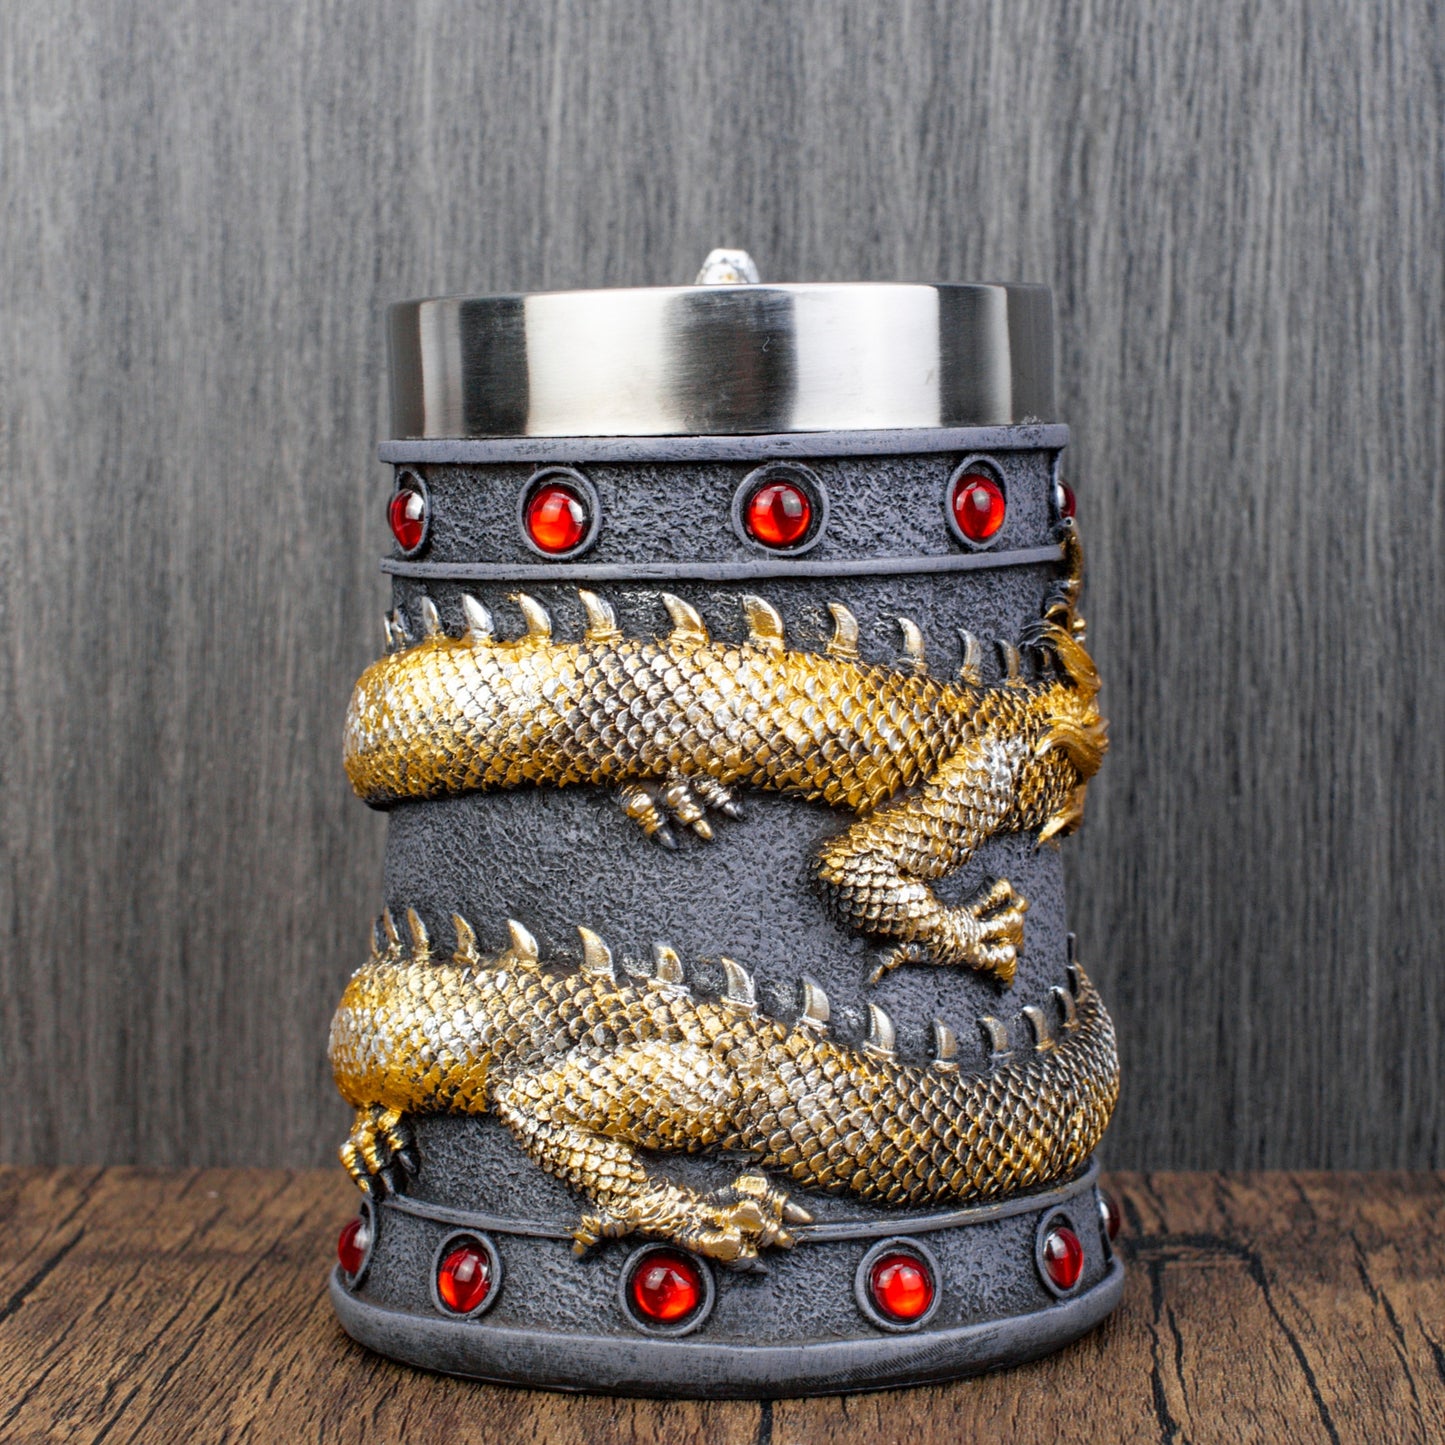 Exclusive dragon-themed tankard mug